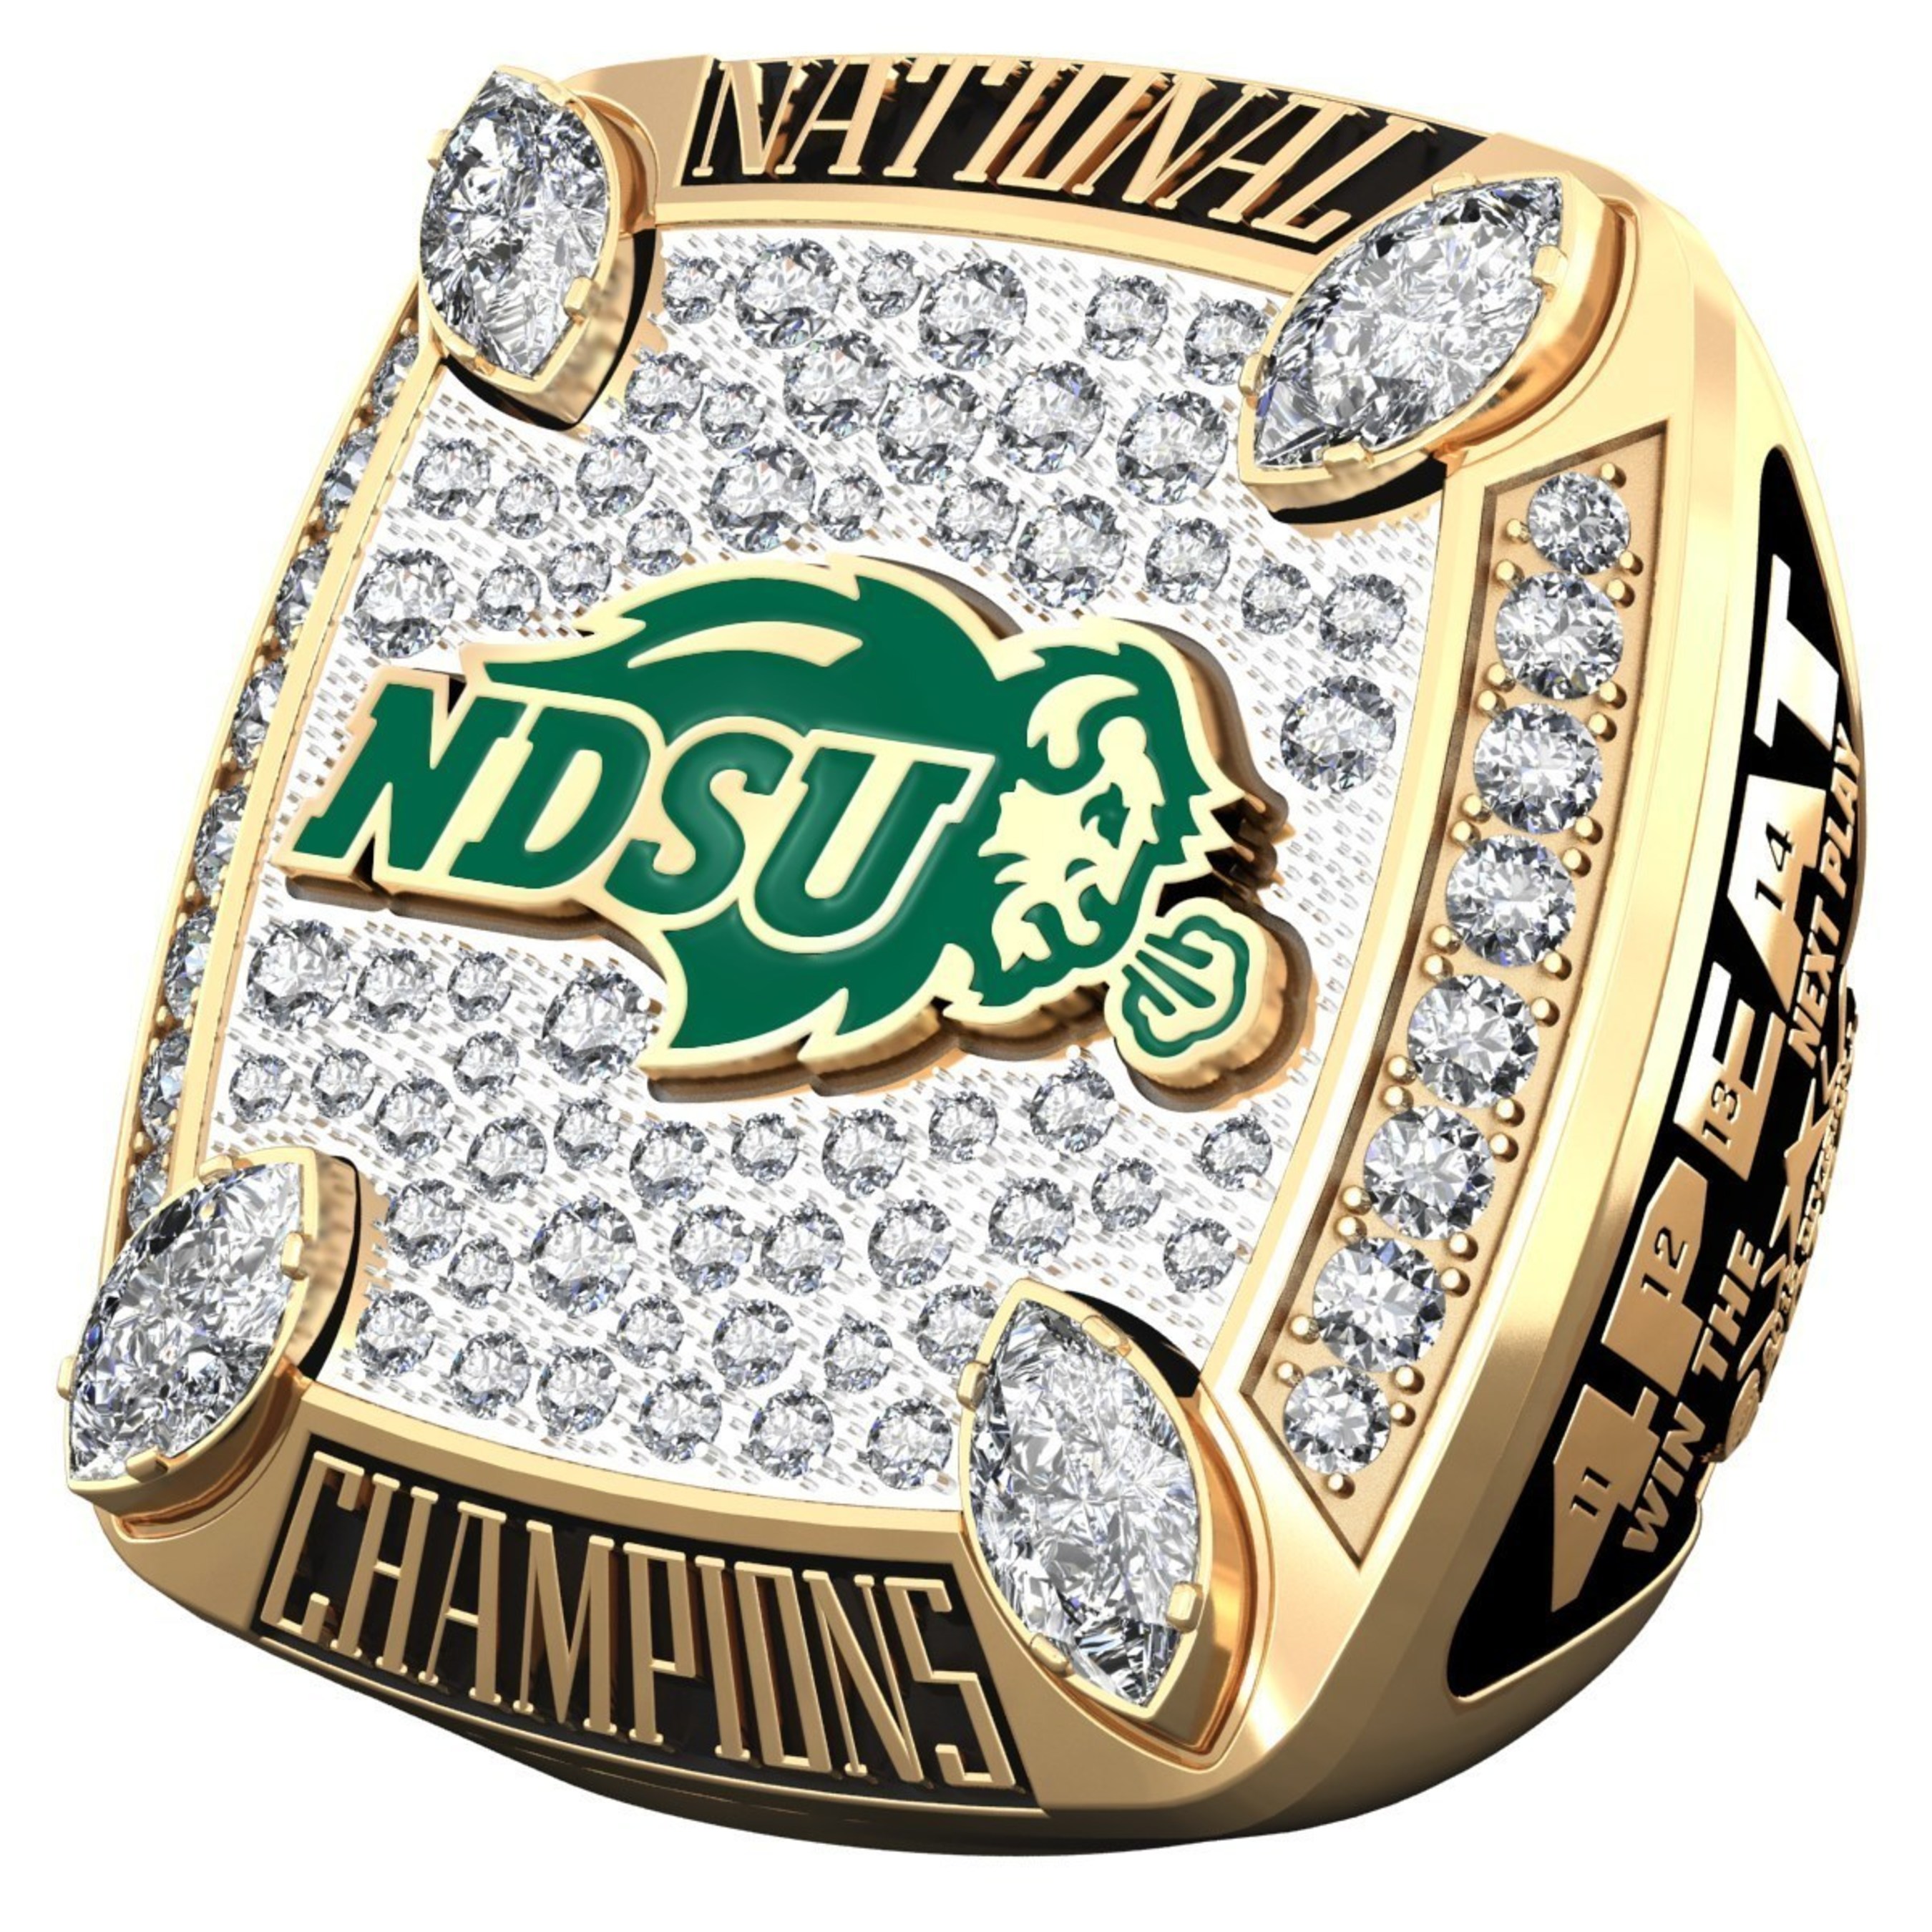 North Dakota State University 2015 Football Championship Subdivision (FCS) Championship ring